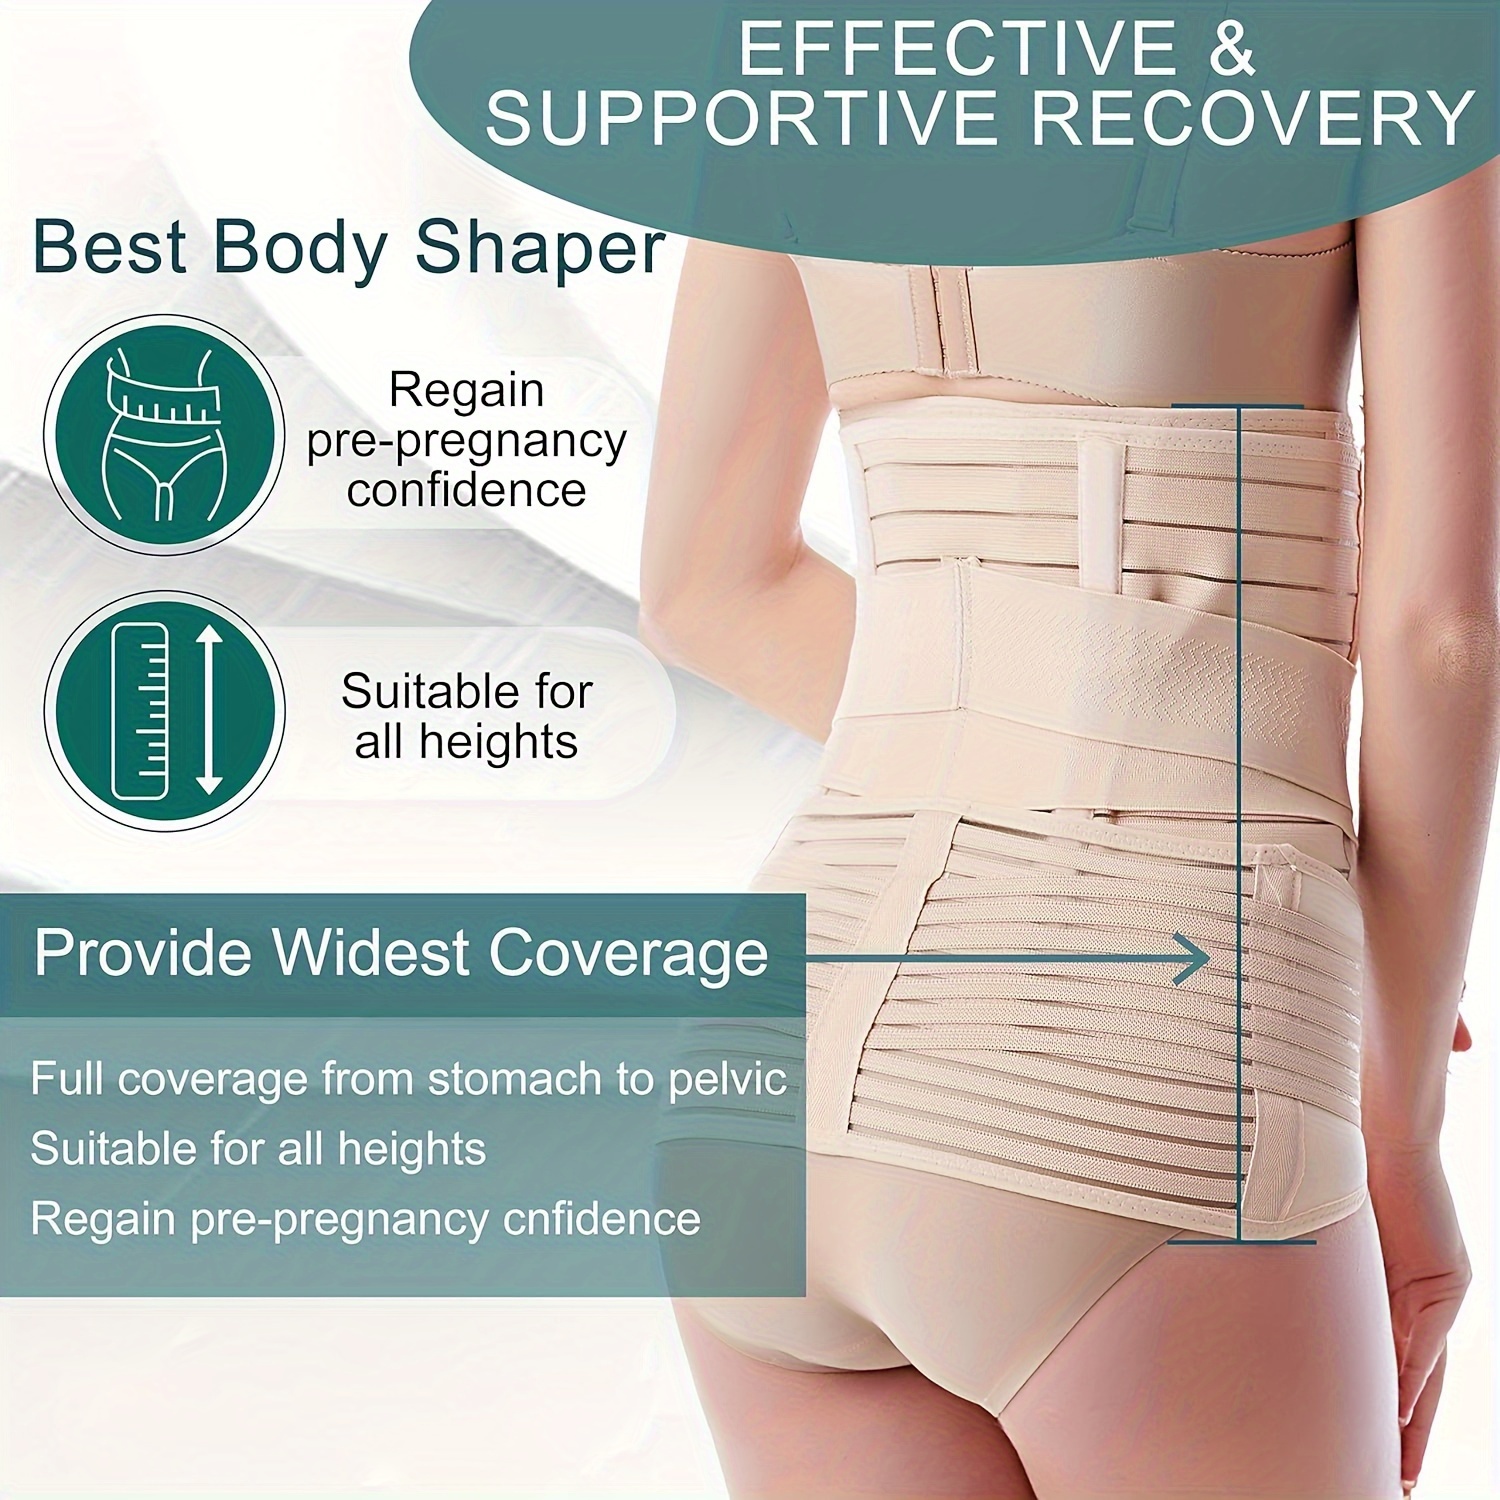 3 in 1 Postpartum Support Recovery Belly Wrap Waist Pelvis Belt